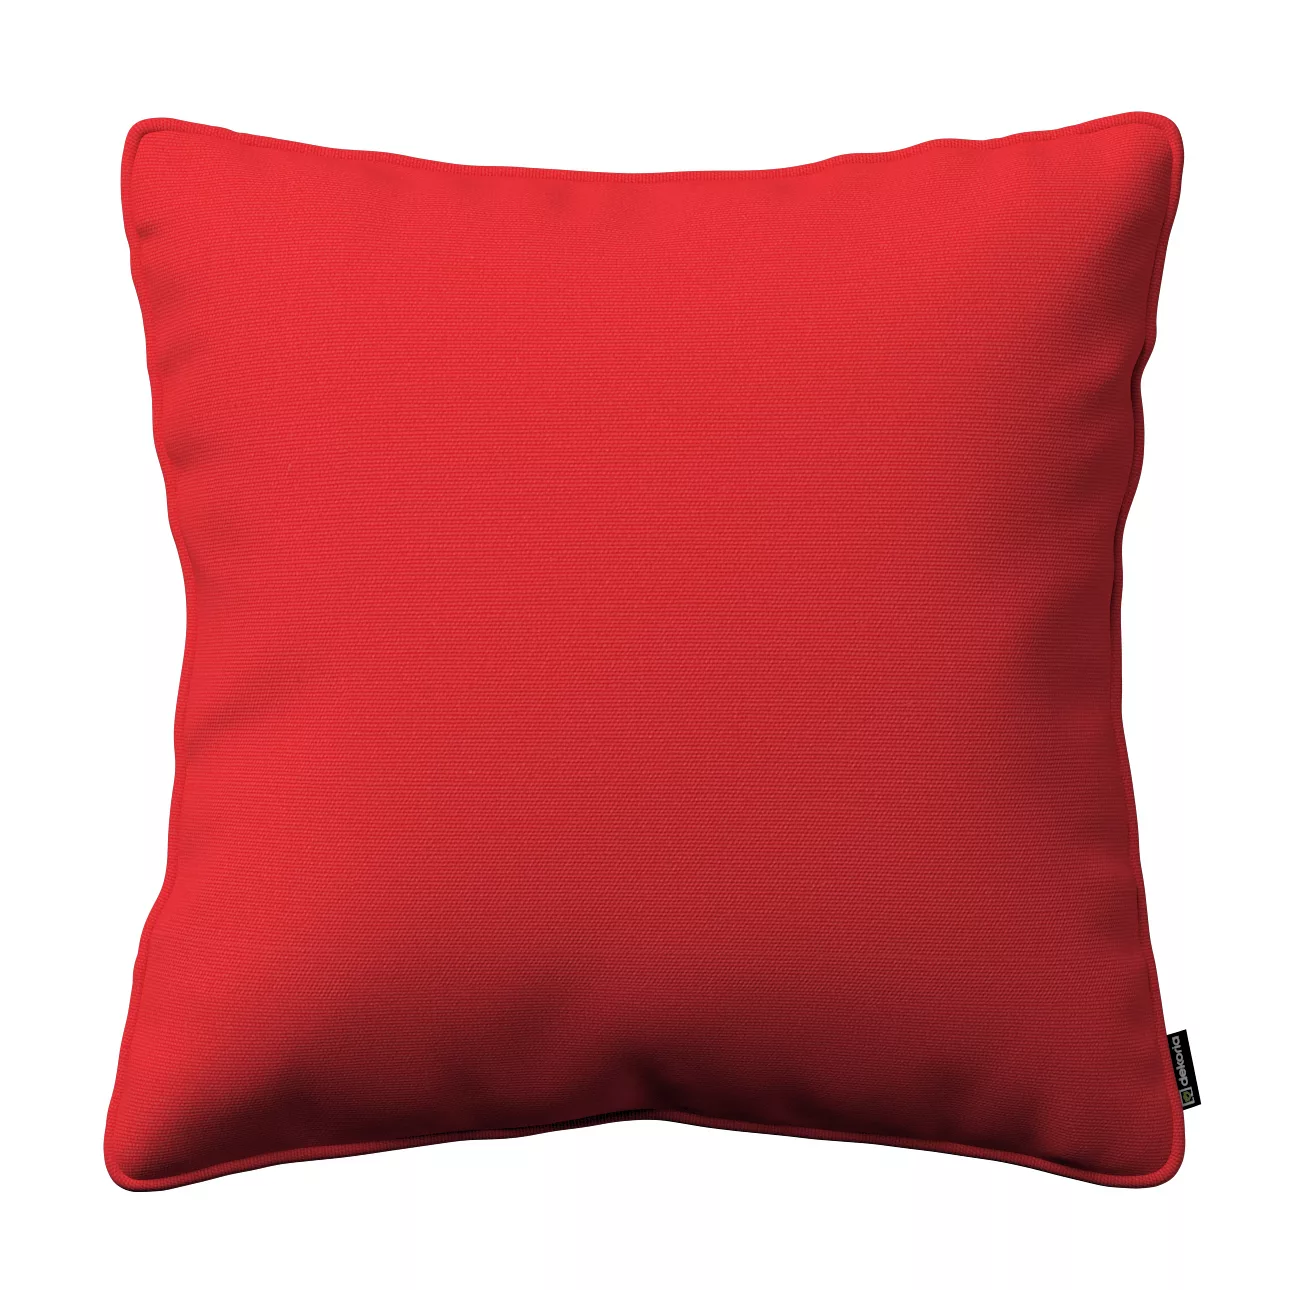 Kissenhülle Gabi mit Paspel, rot, 45 x 45 cm, Loneta (133-43) günstig online kaufen